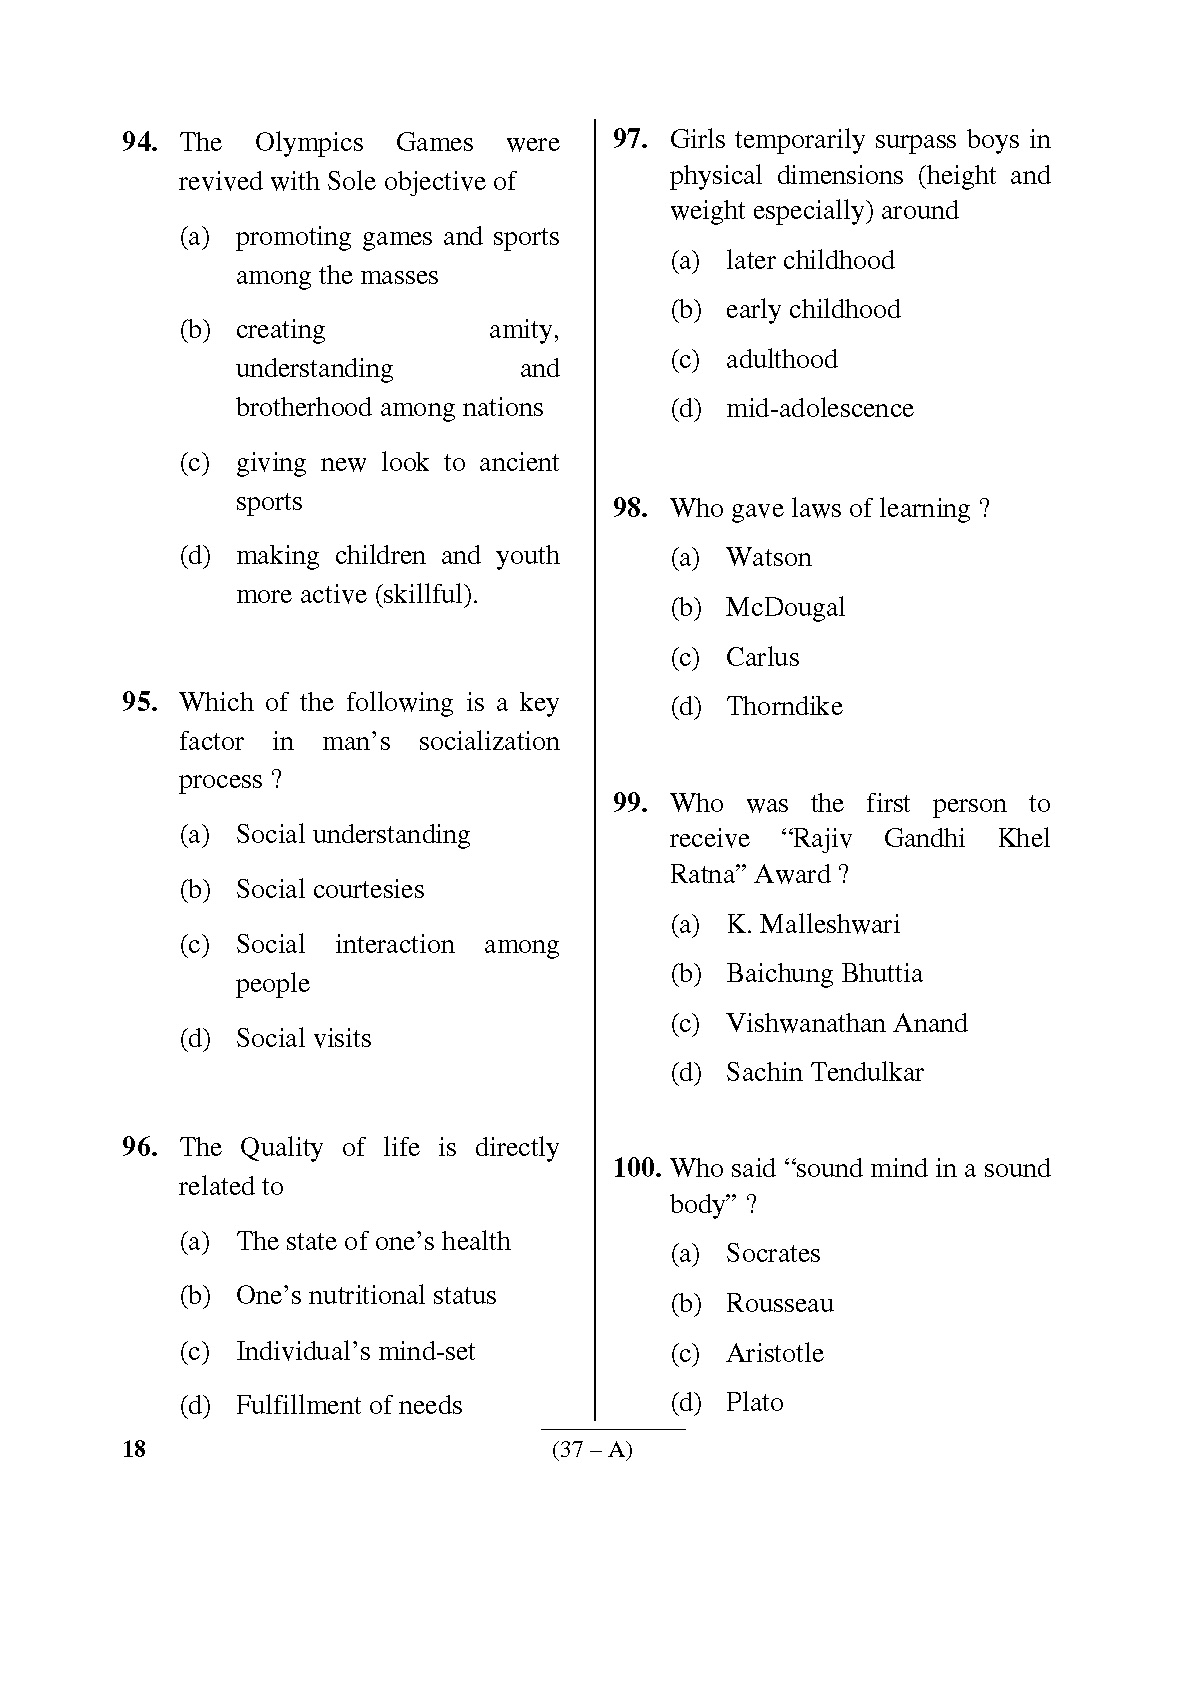 Karnataka PSC Physical Education Teacher Exam Sample Question Paper Subject code 18 37